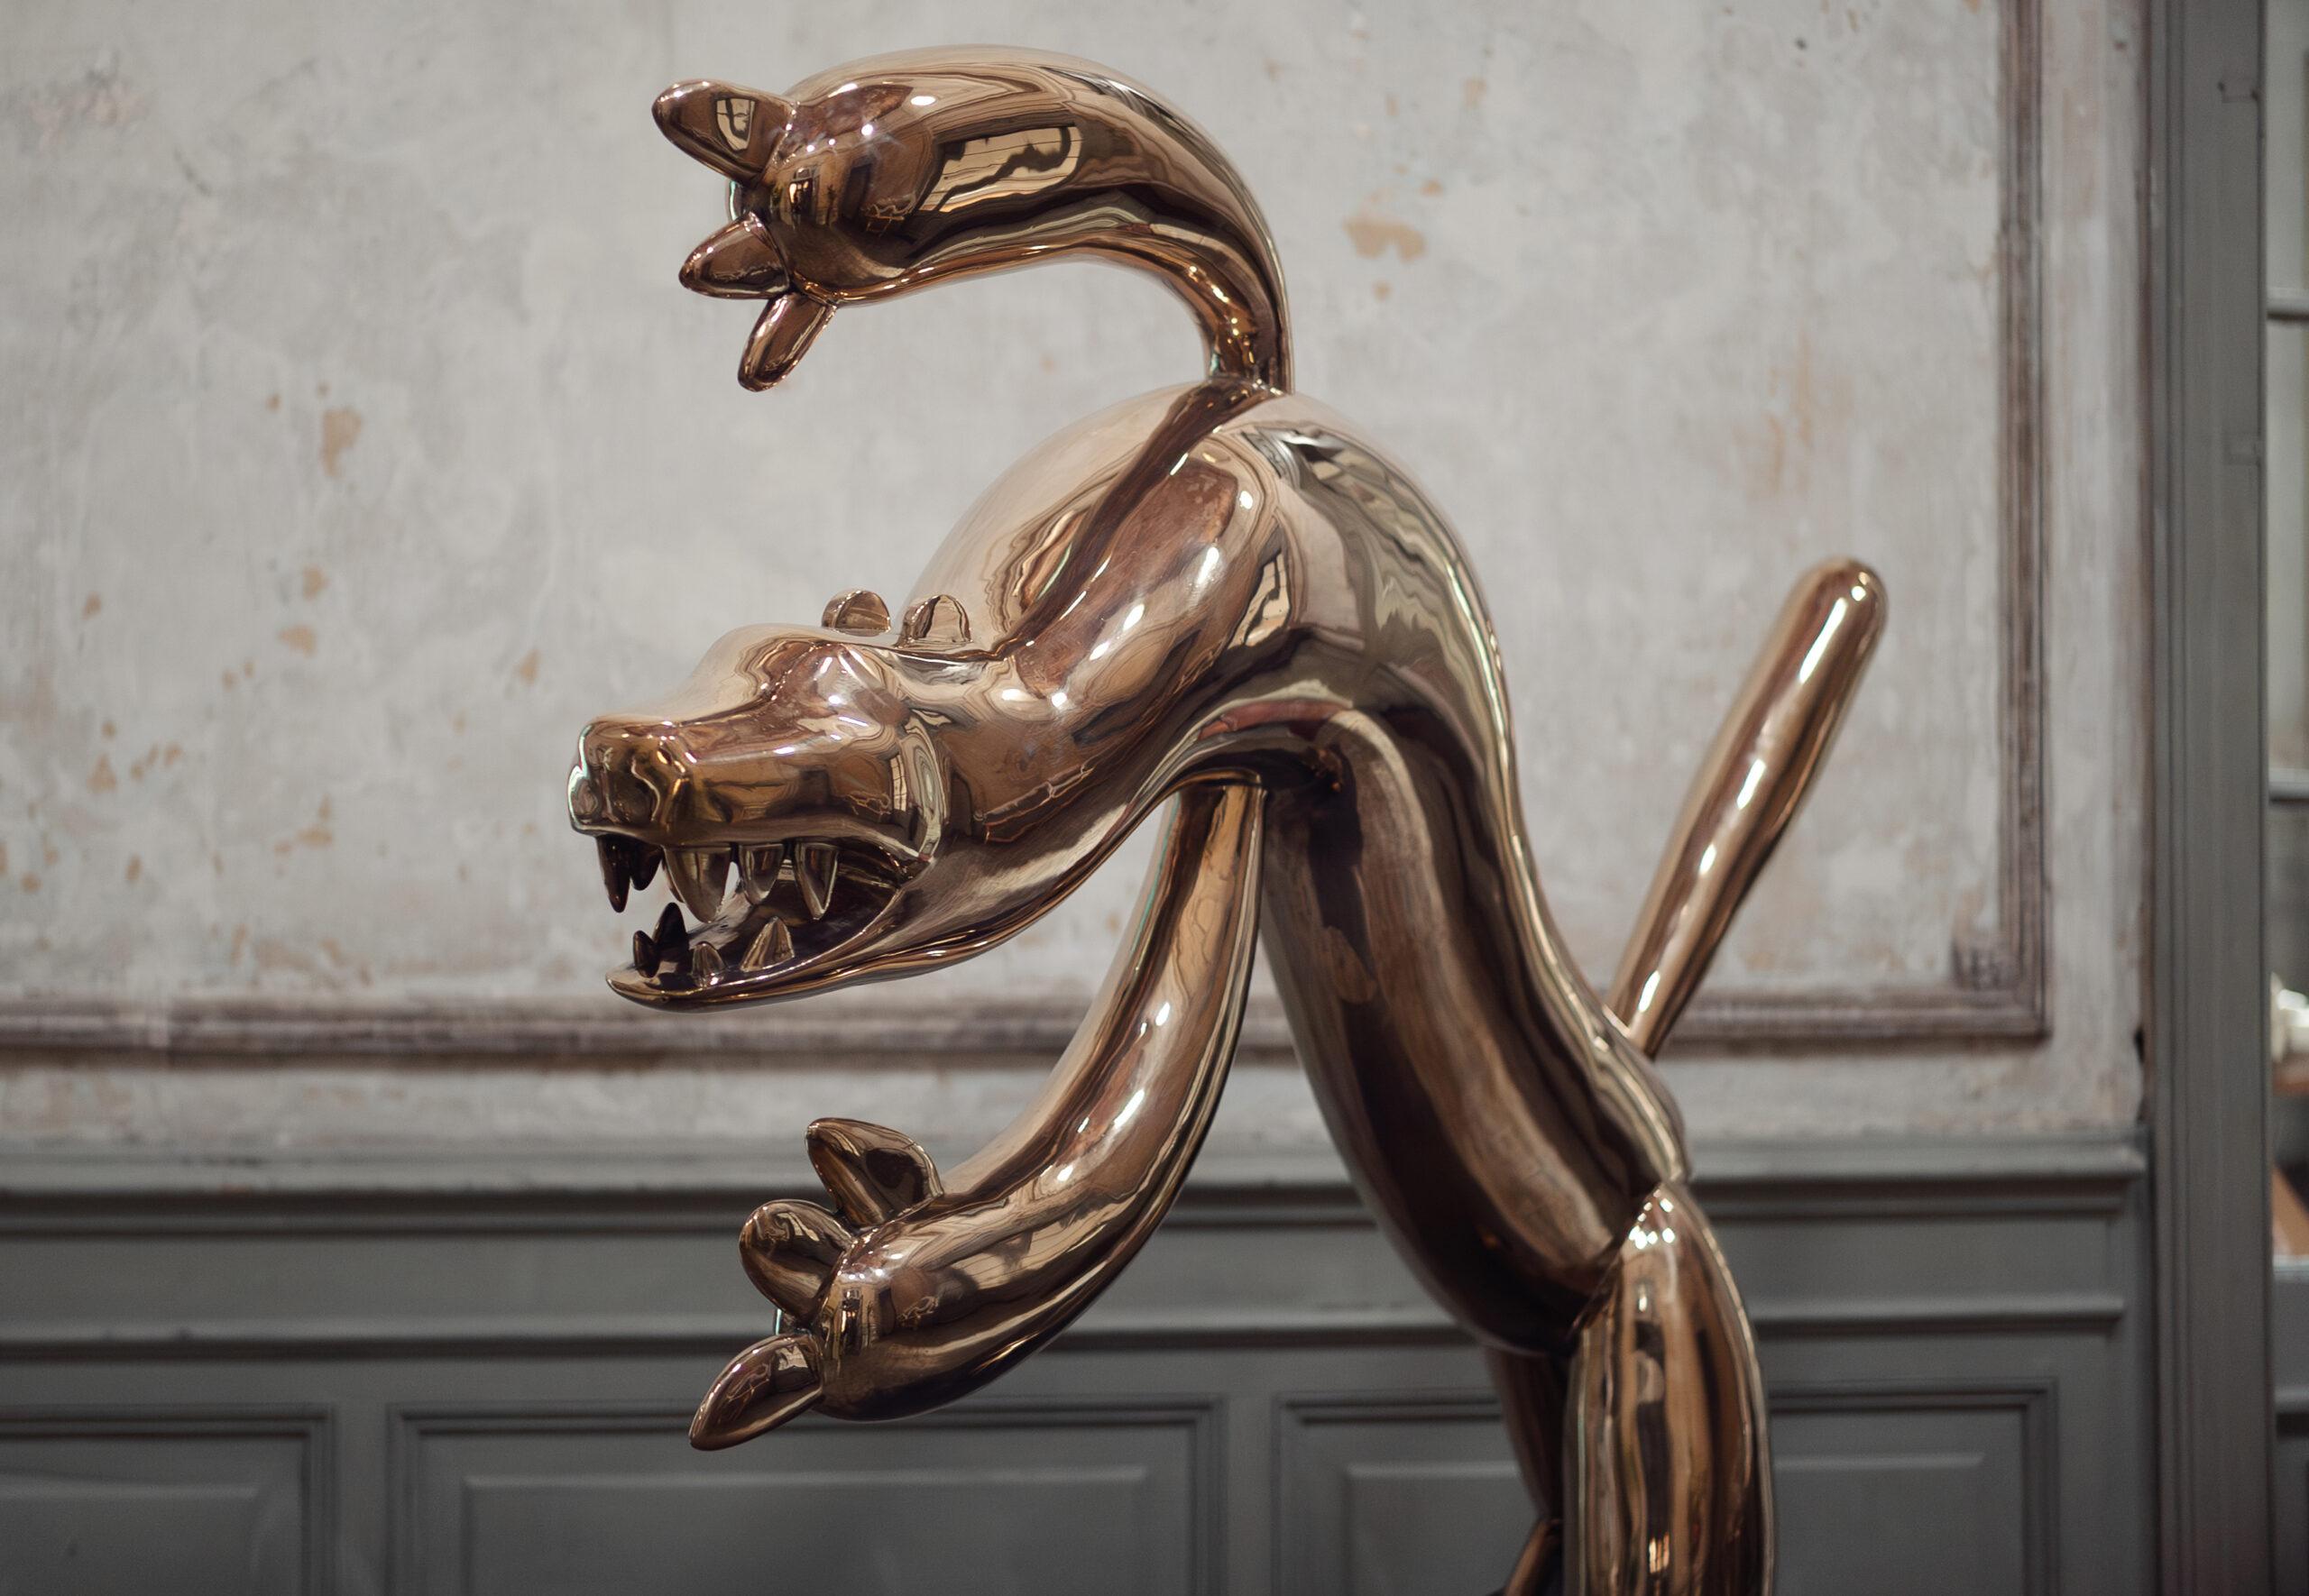 Tiger by Marcelo Martin Burgos - Polished bronze sculpture, golden, wild cat For Sale 8